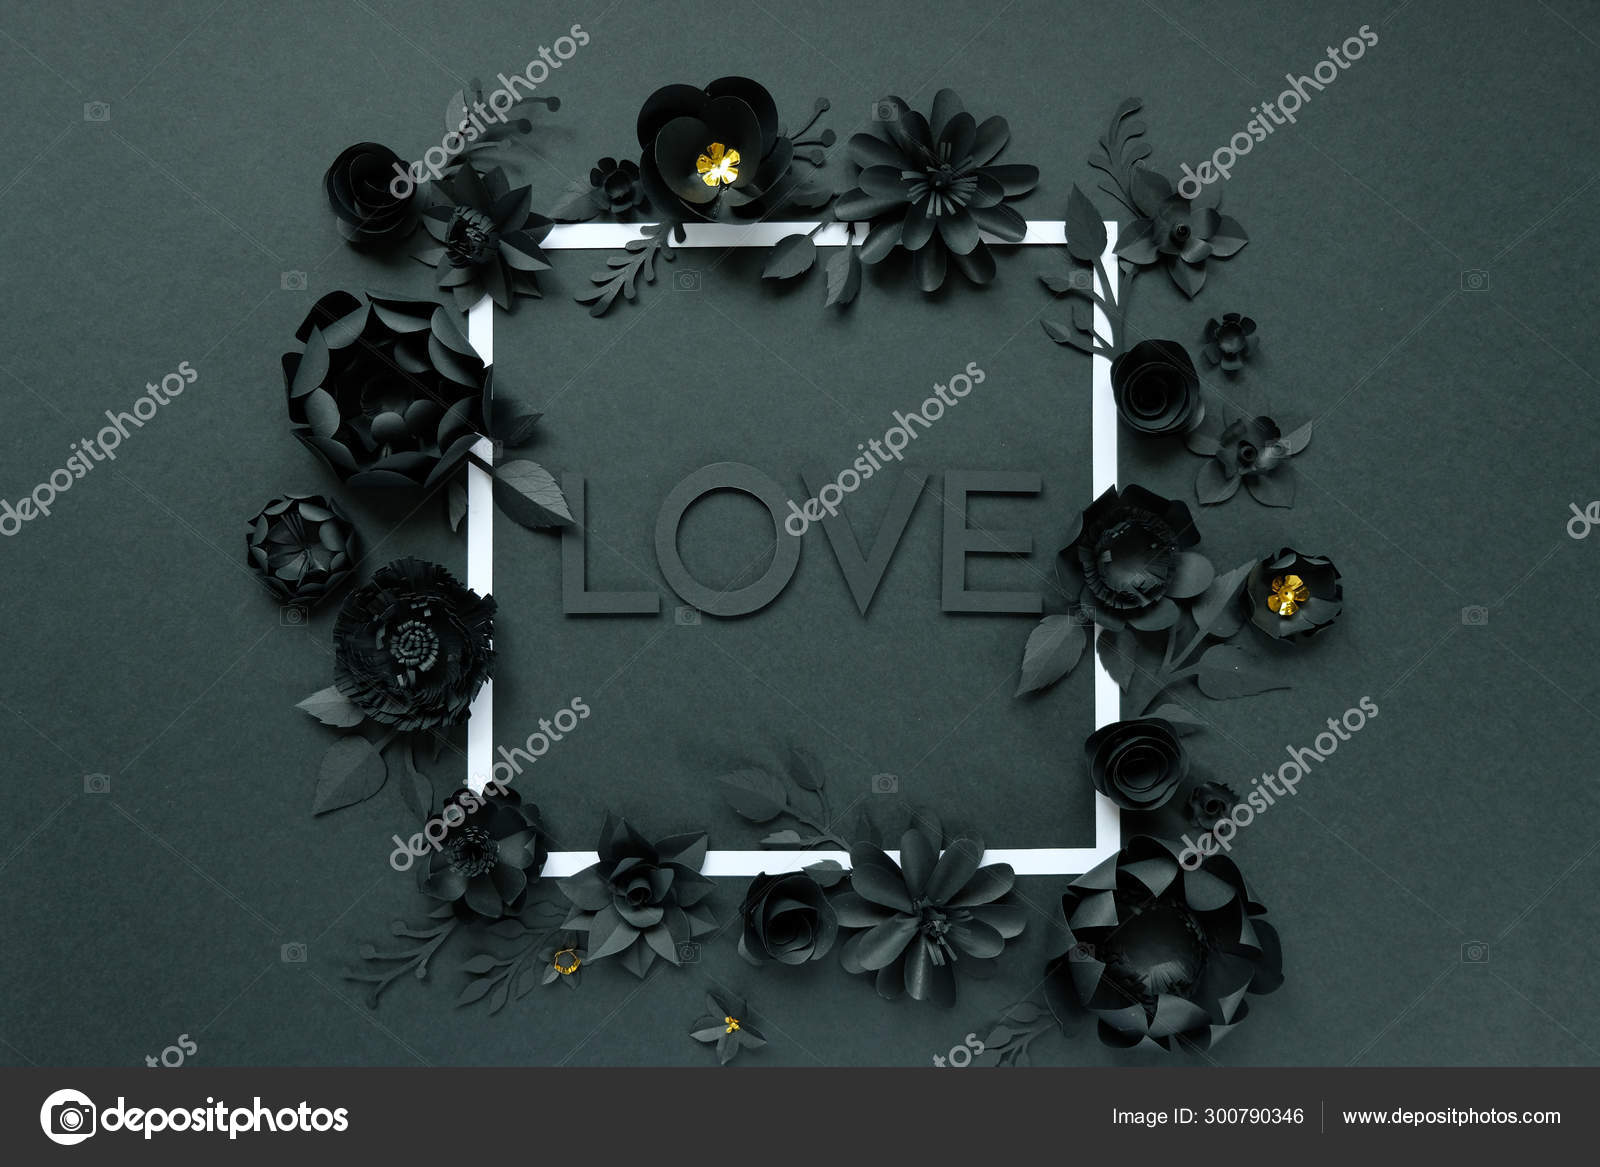 Black paper flowers, floral background, bridal bouquet, wedding